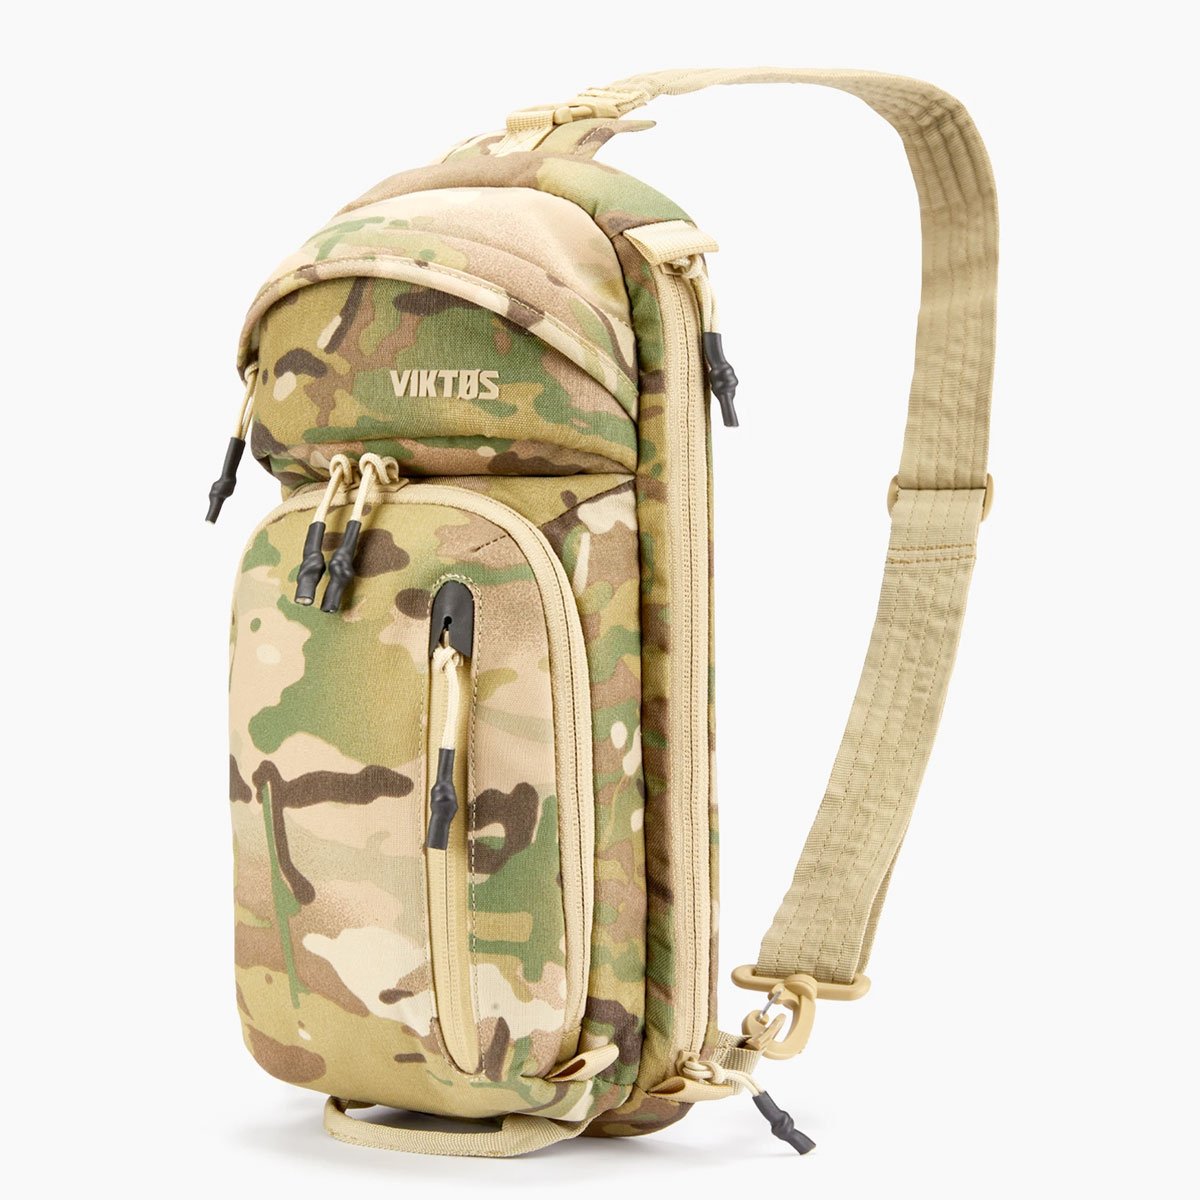 VIKTOS Upscale 2 Sling Bag Bags, Packs and Cases VIKTOS Green Multicam Tactical Gear Supplier Tactical Distributors Australia